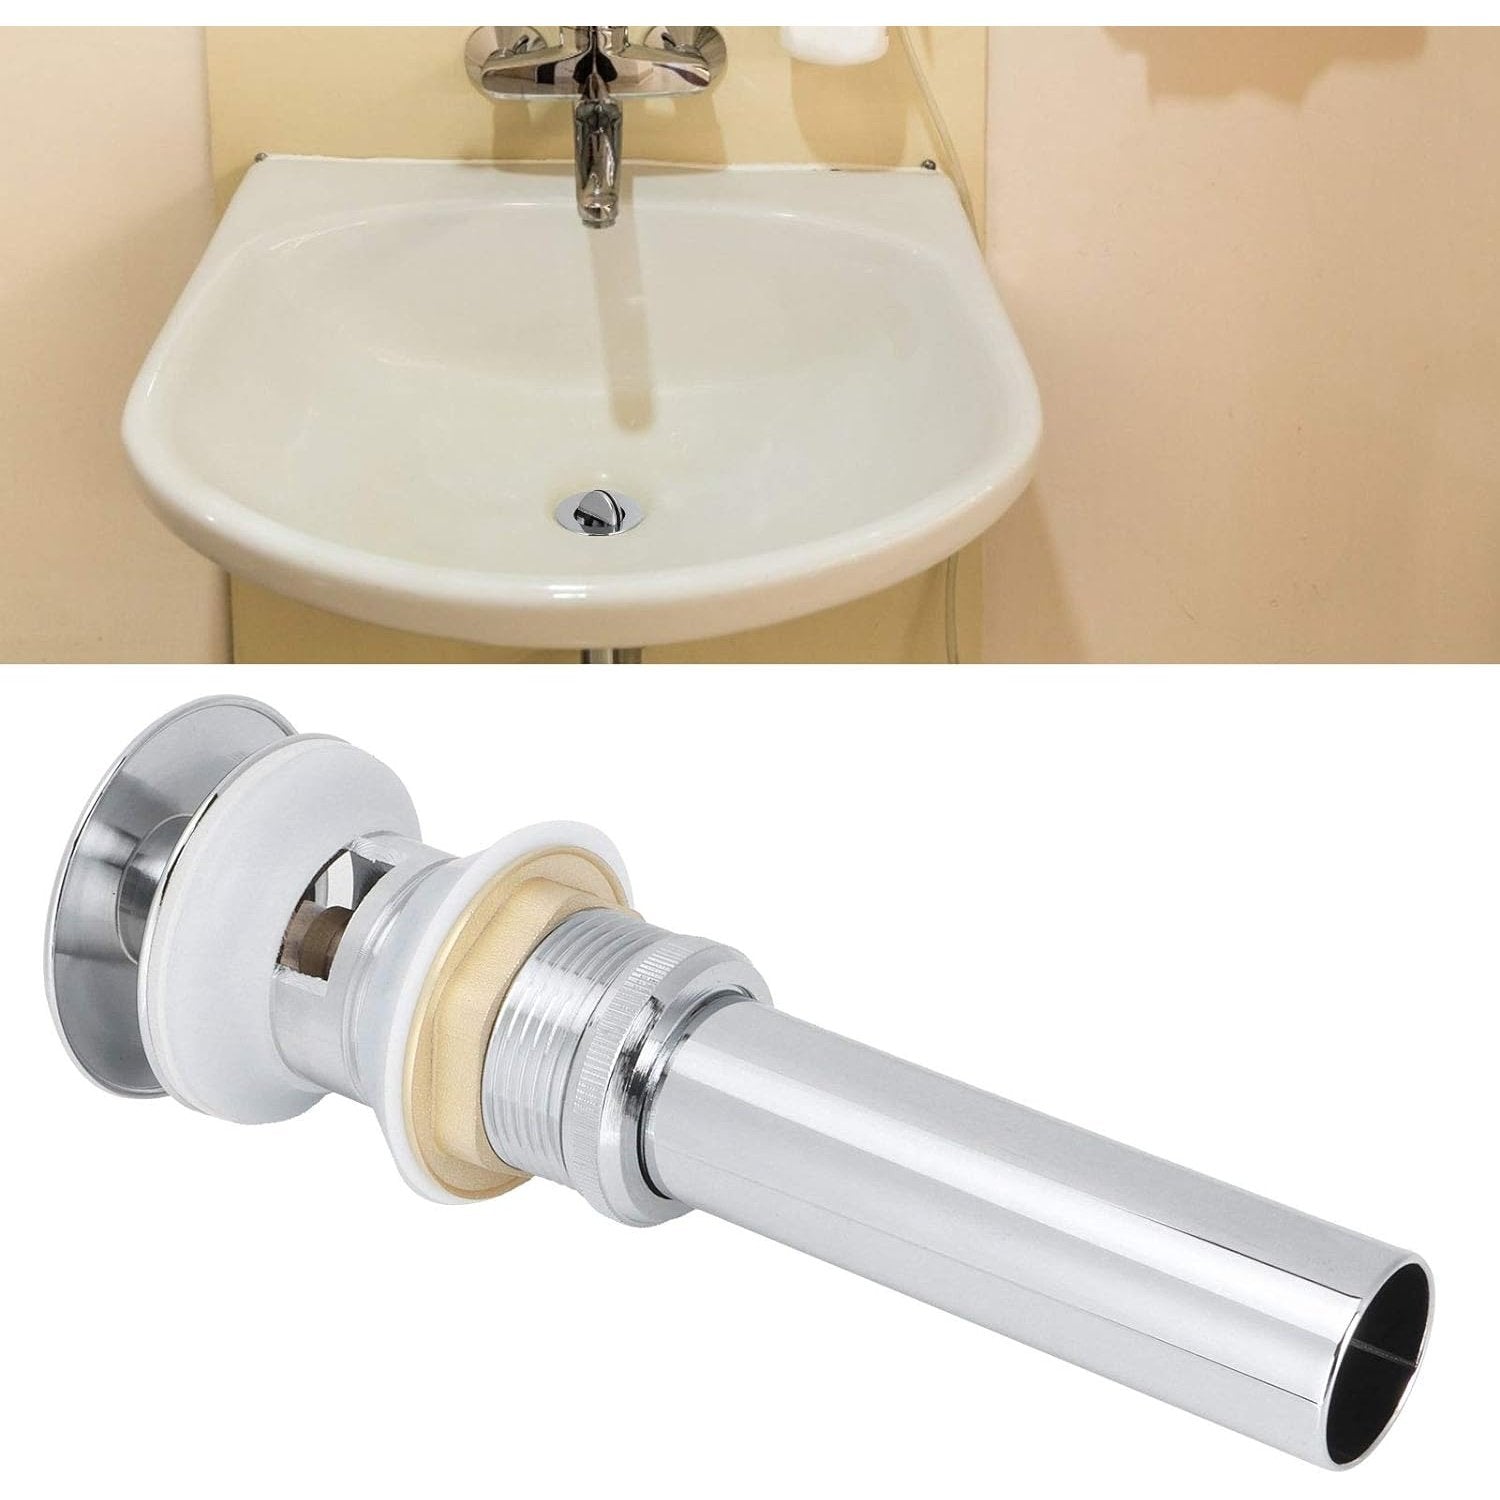 Buy Brass Bathroom Basin Pop Up Drain Stopper - S03001C-1 | Shop at Supply Master Accra, Ghana Bathroom Accessories Buy Tools hardware Building materials